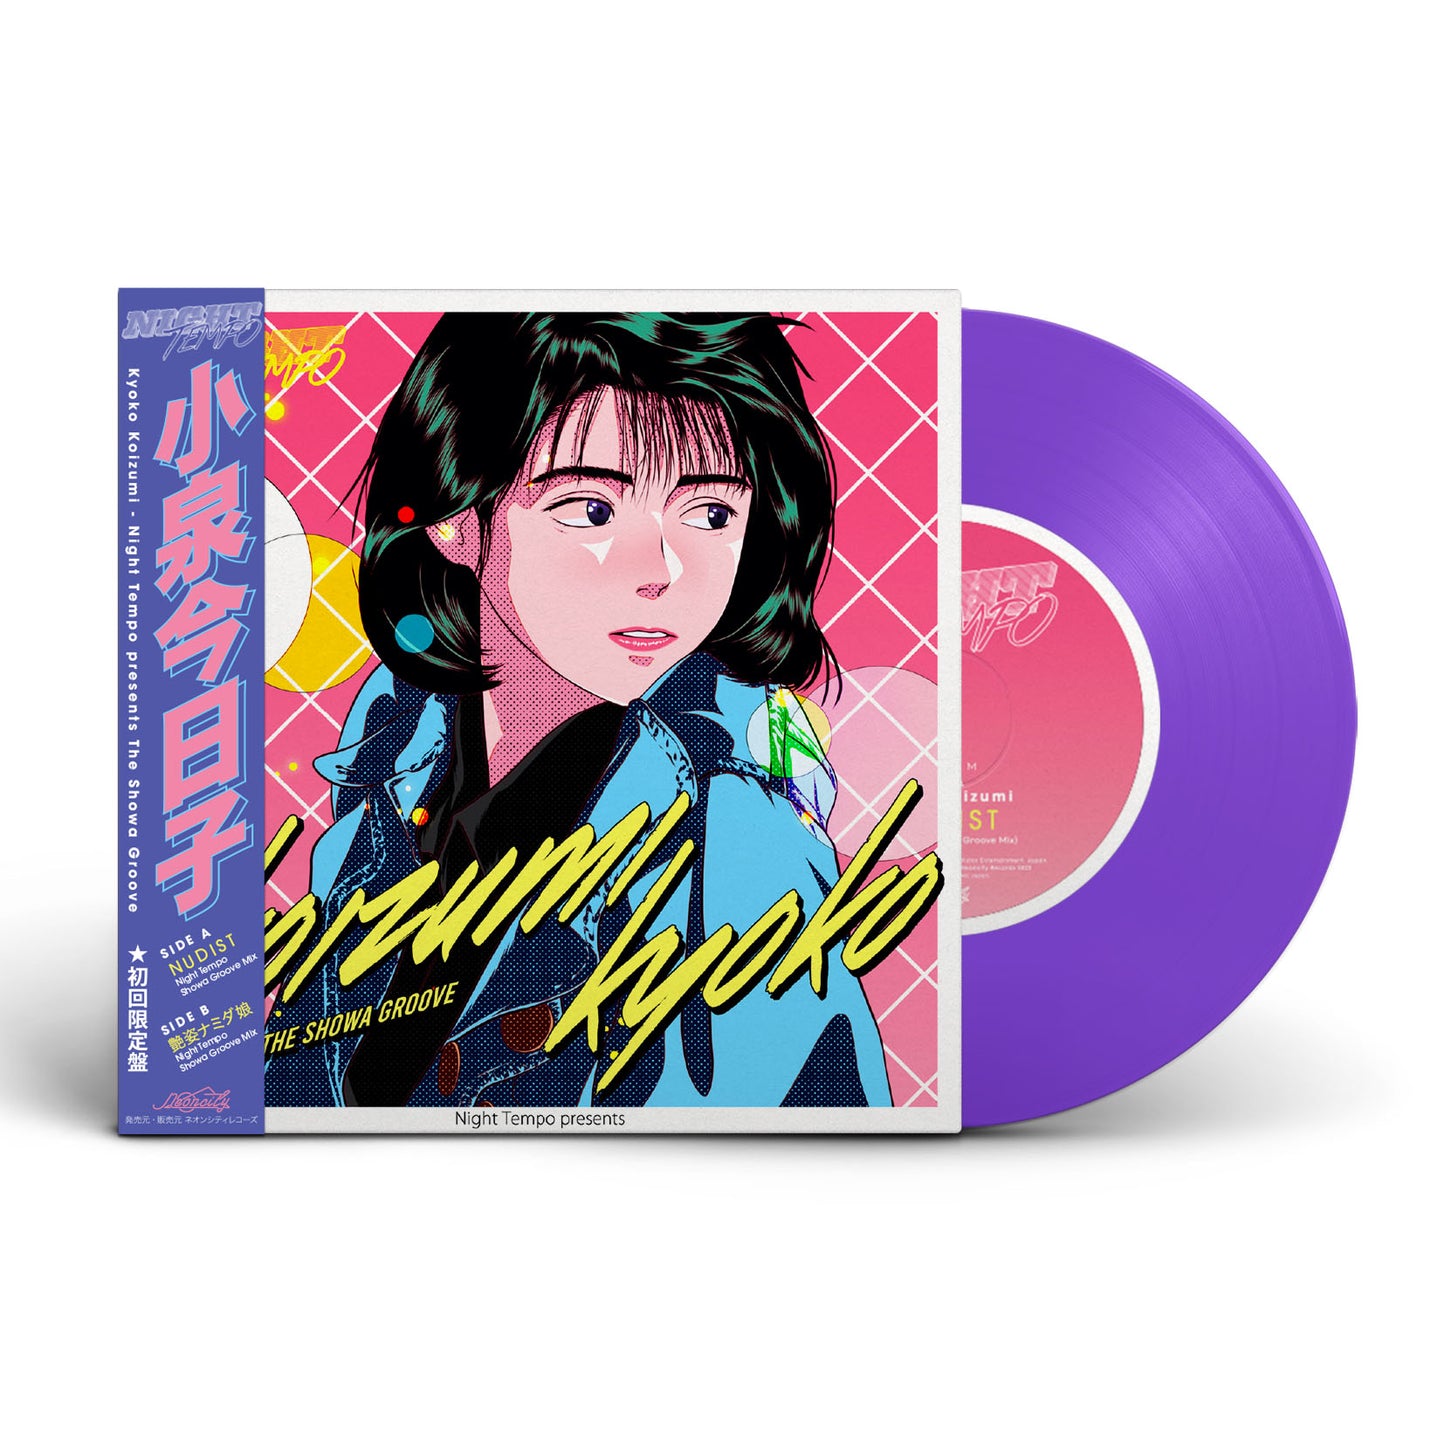 [Pre-order] Kyoko Koizumi - Night Tempo presents The Showa Groove 7” Vinyl - Neoncity Records